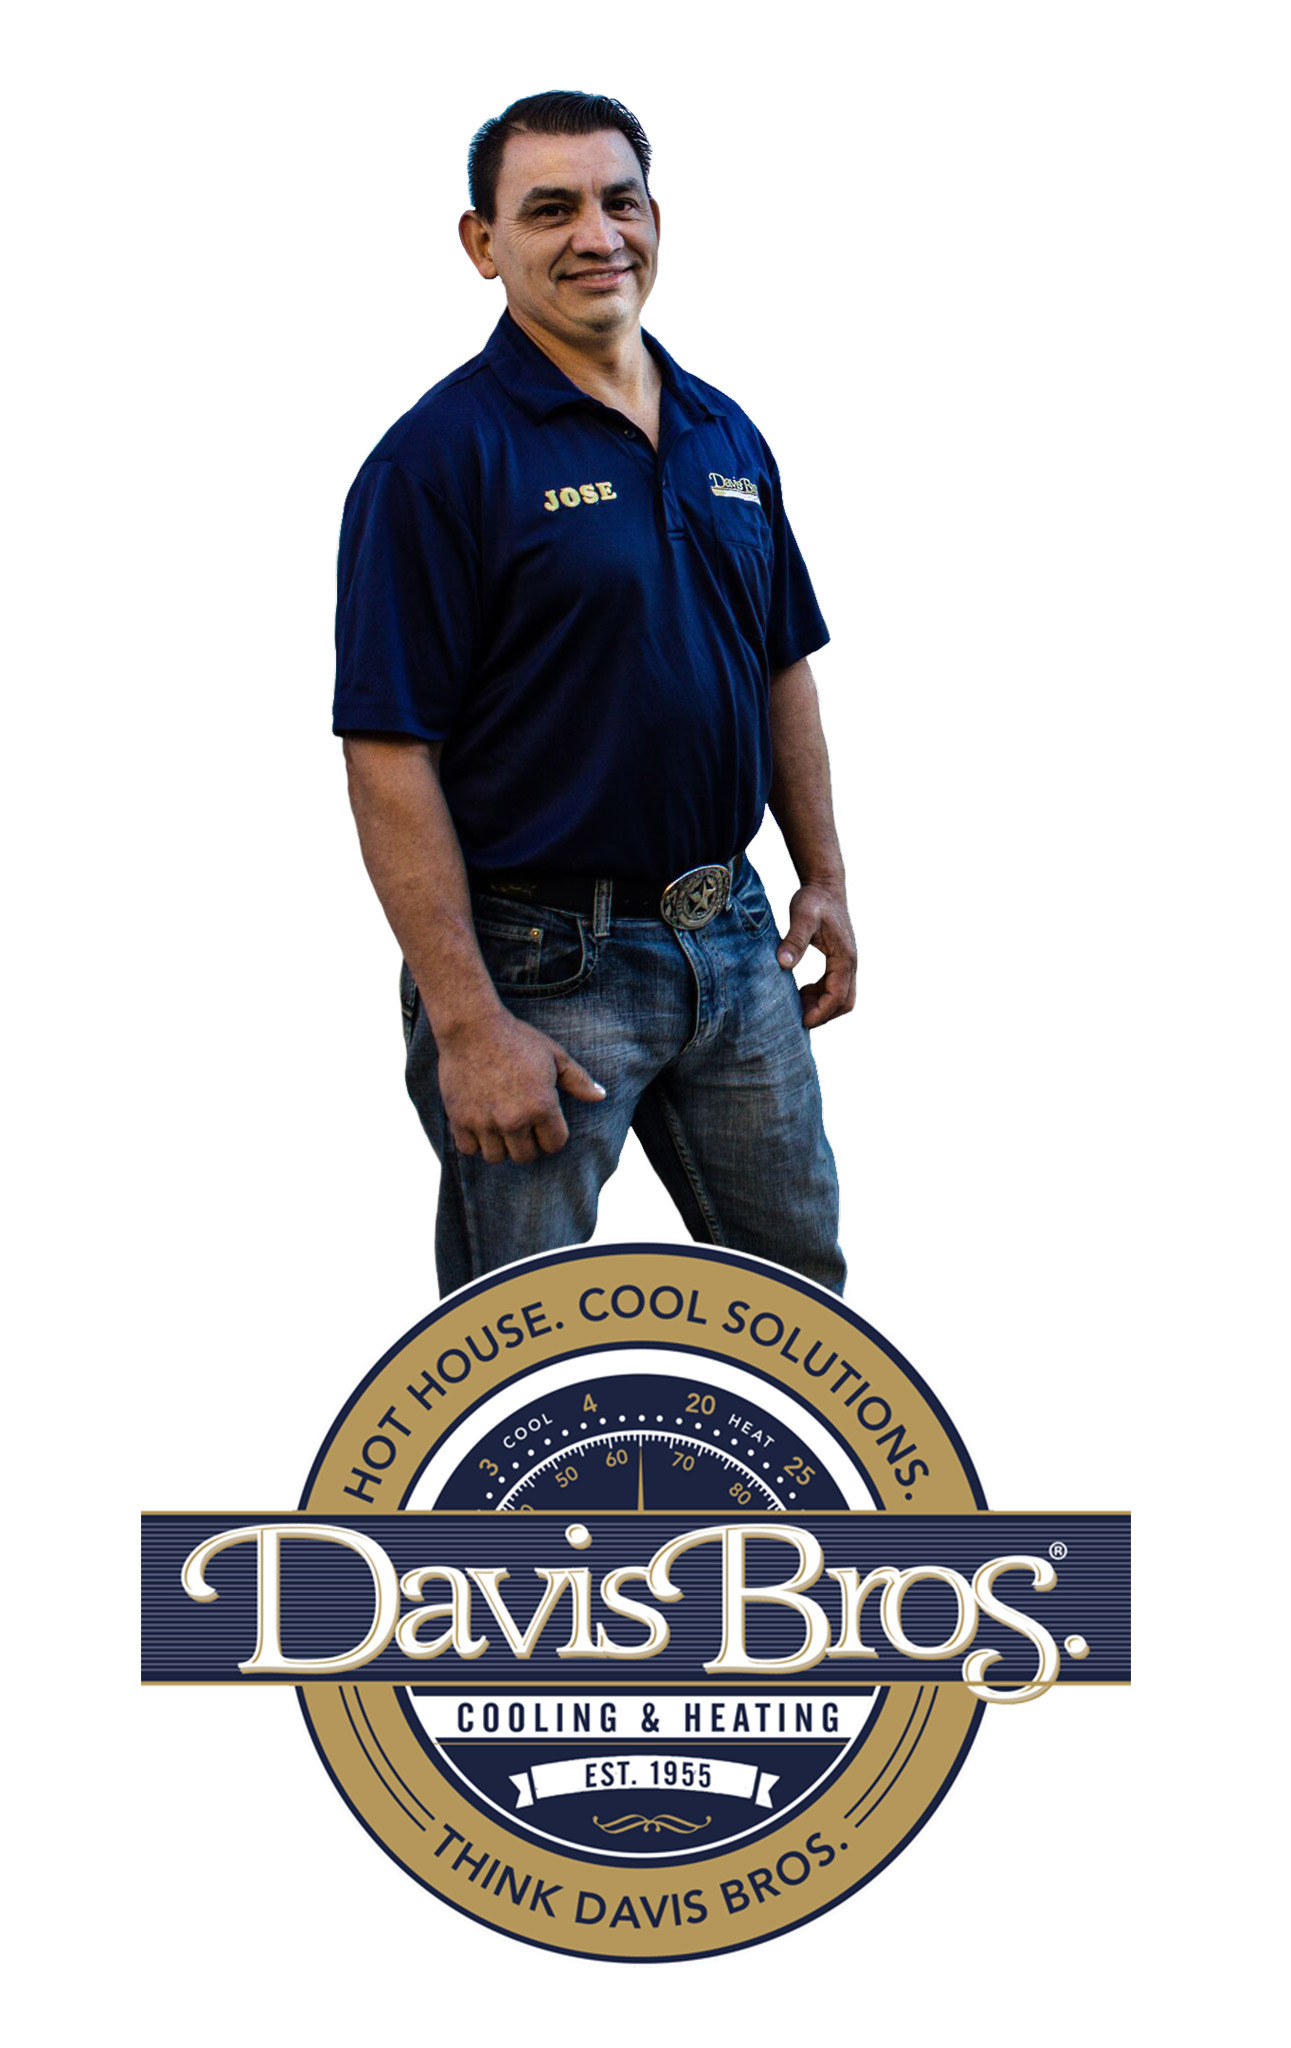 Davis Bros. Worker with logo below